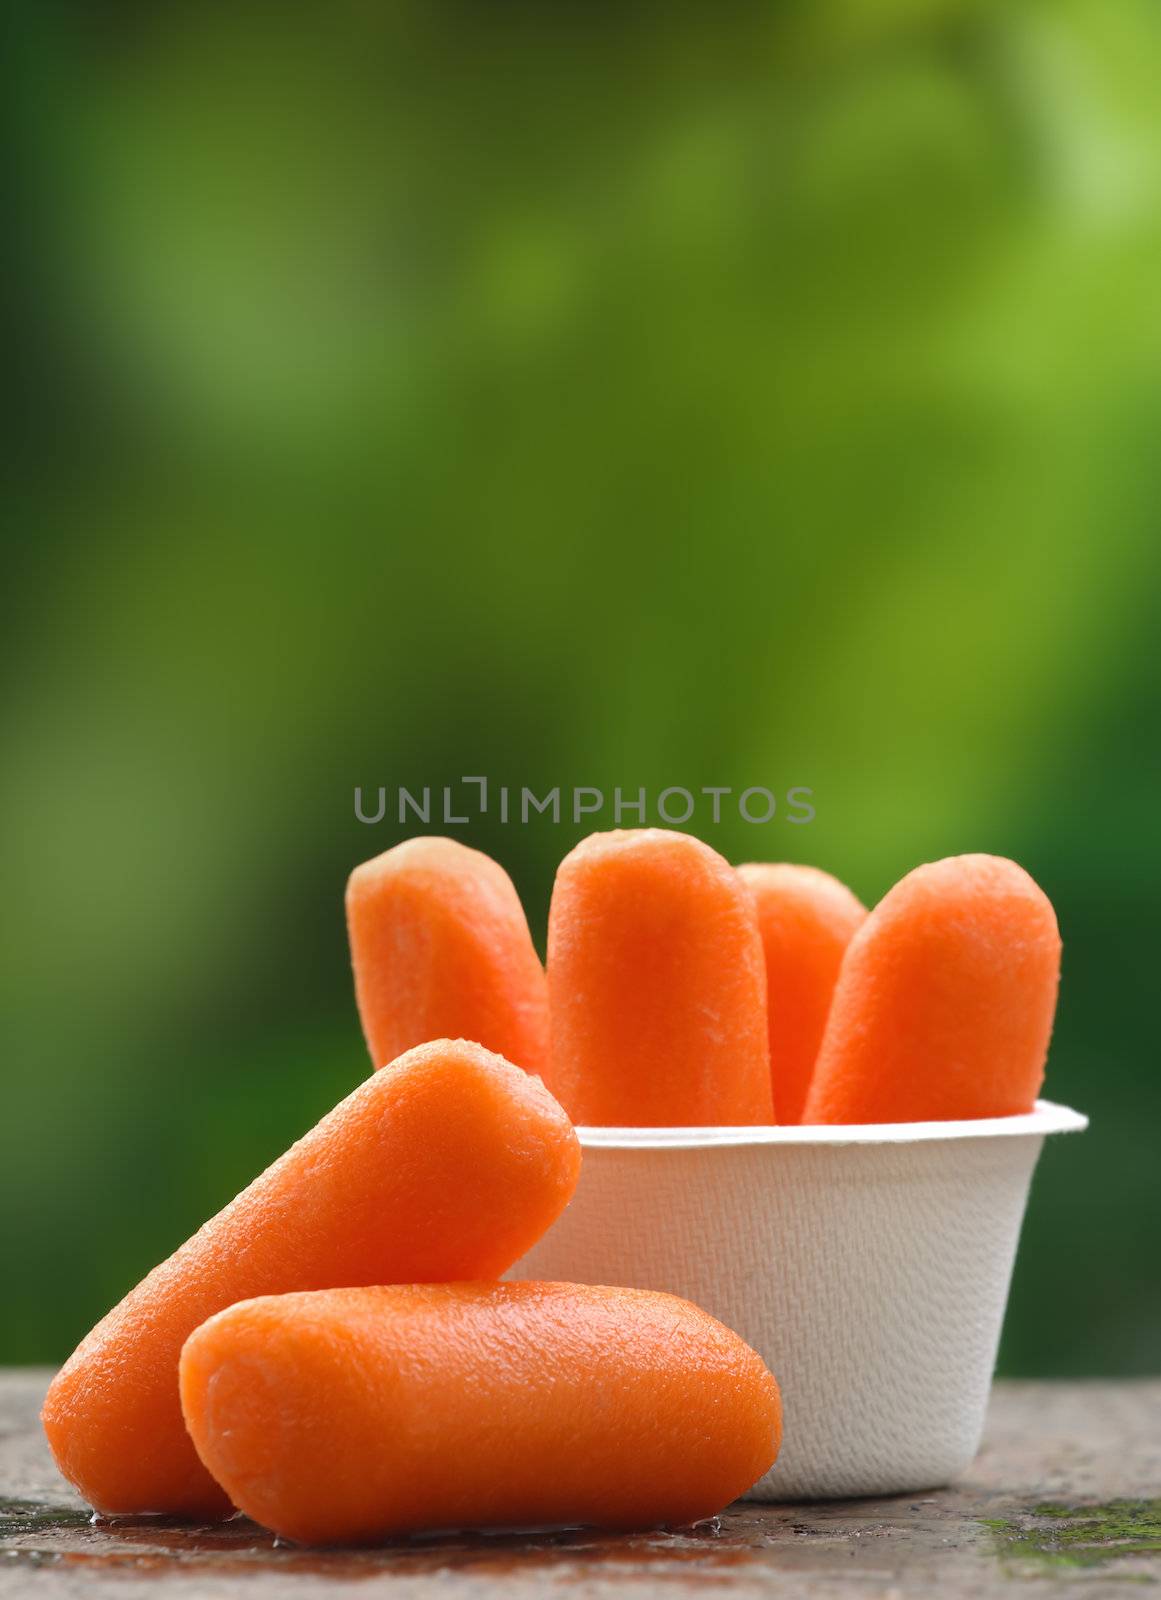 Organic peeled carrots by carterphoto